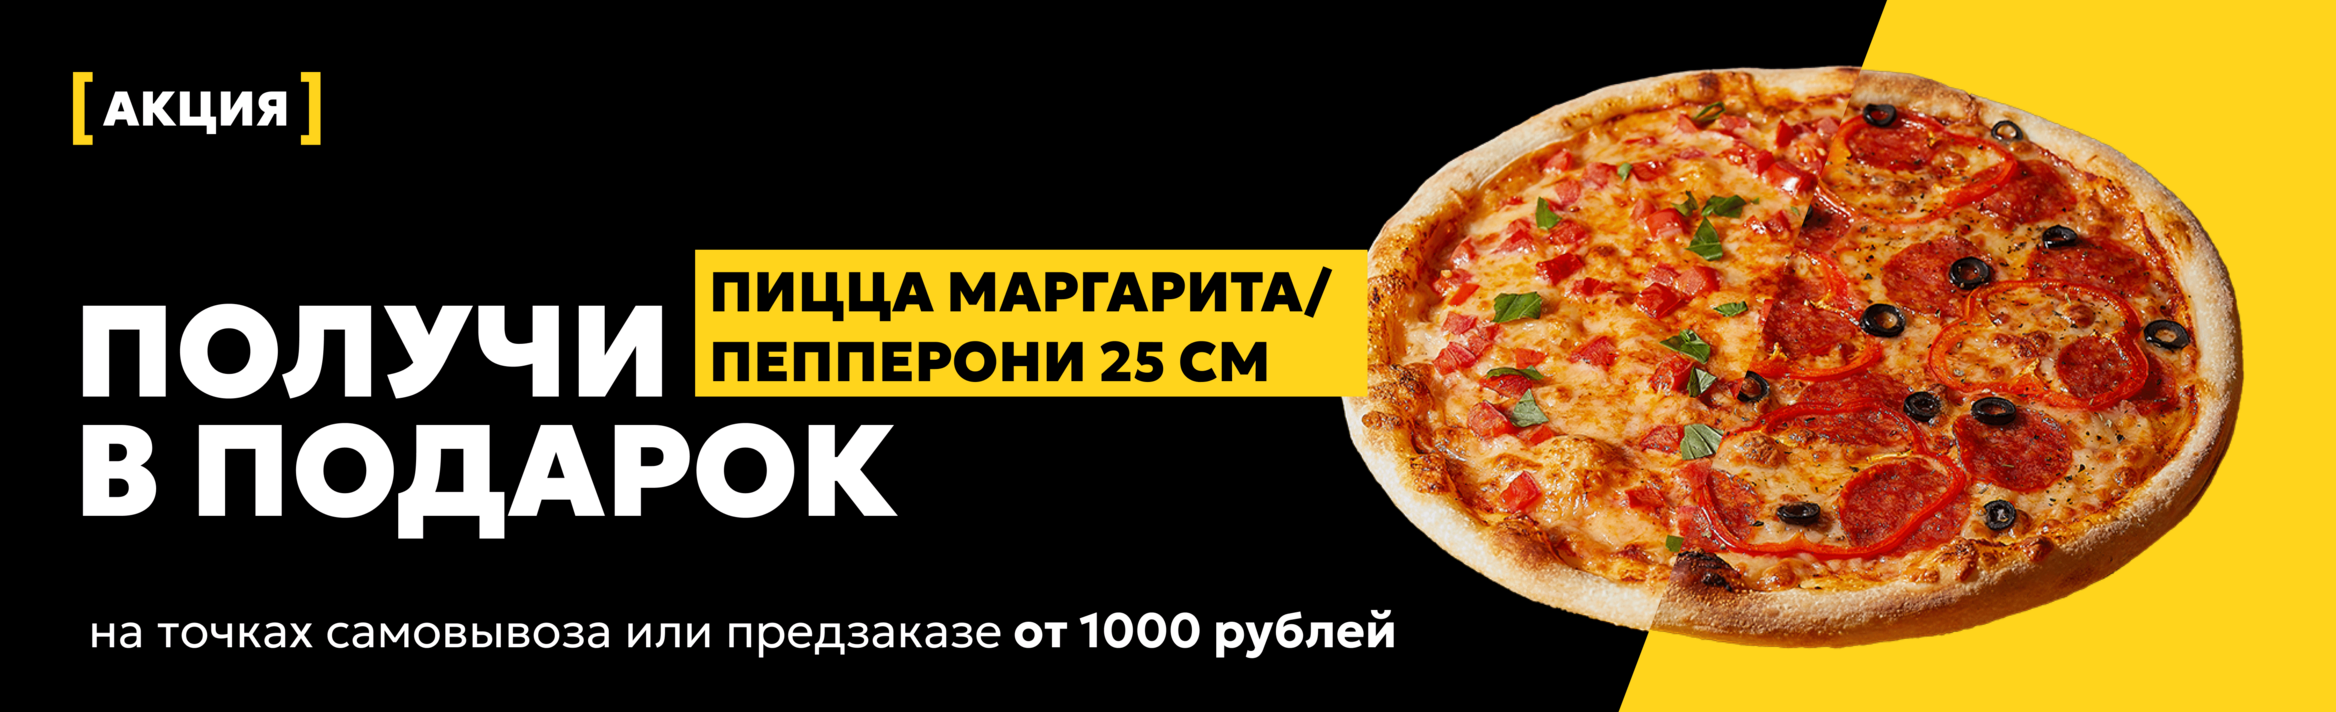 Пицца Пепперони или Маргарита 25 см В ПОДАРОК! 